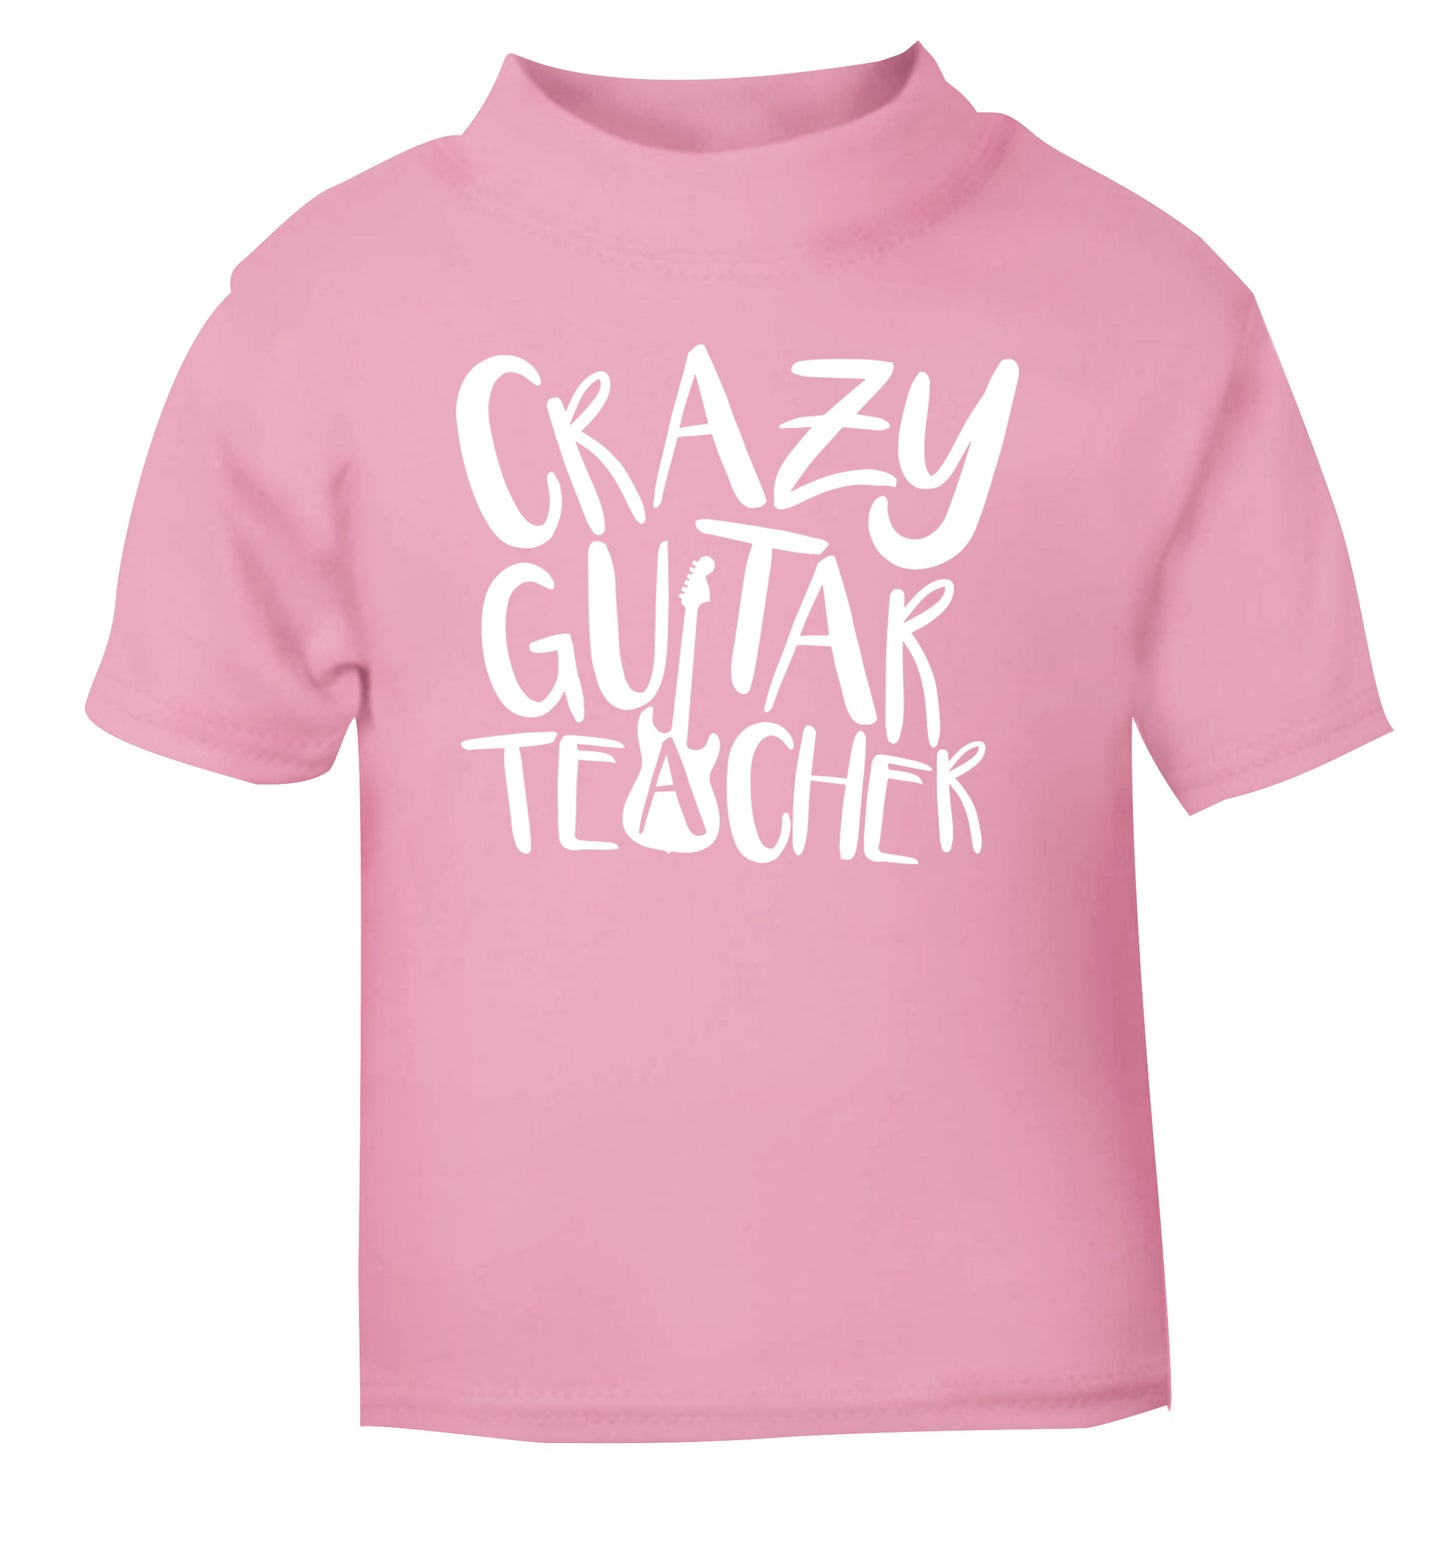 Crazy guitar teacher light pink Baby Toddler Tshirt 2 Years